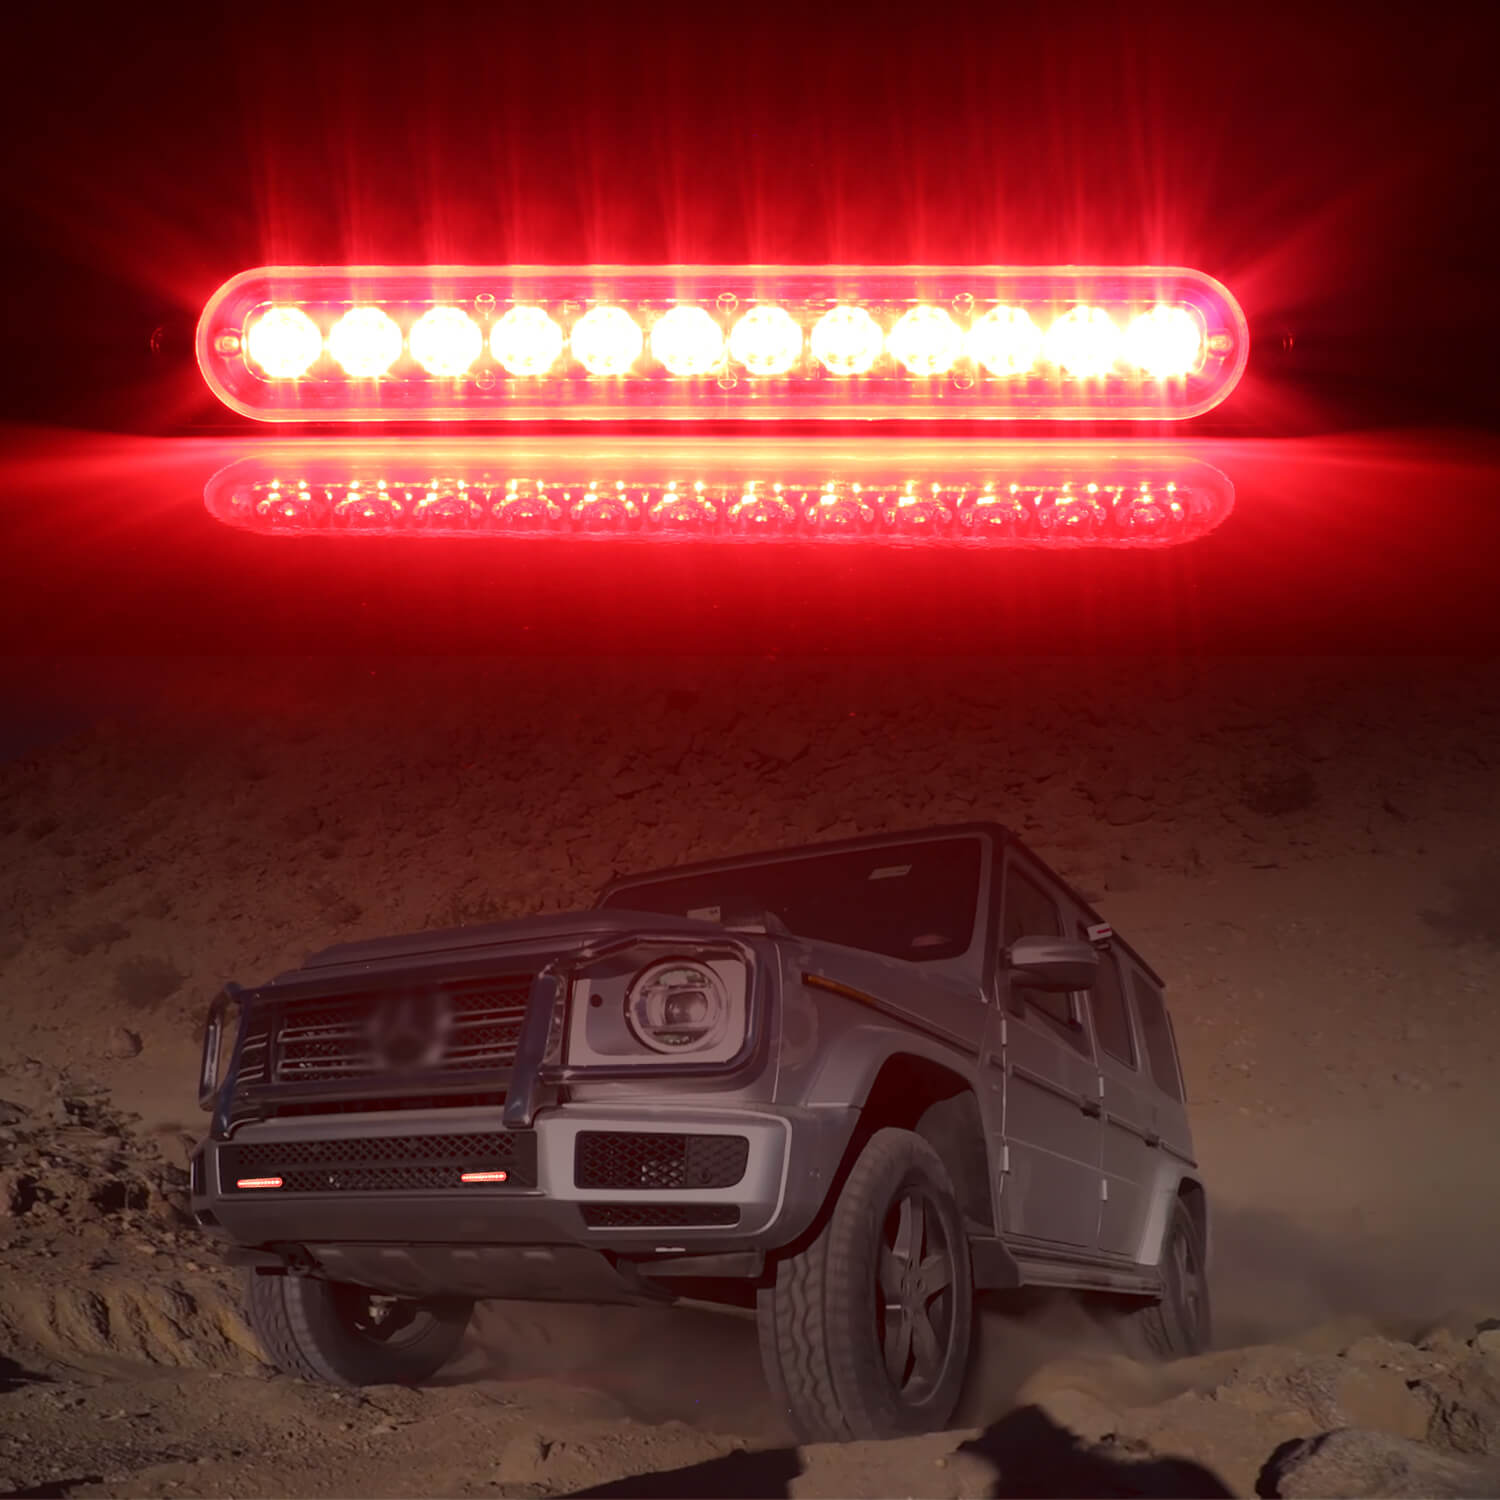 Emergency LED Strobe Lights Bar for Offroad Car Truck Warning Hazard Flash Grille and Surface Mount Light - Red 12-LED